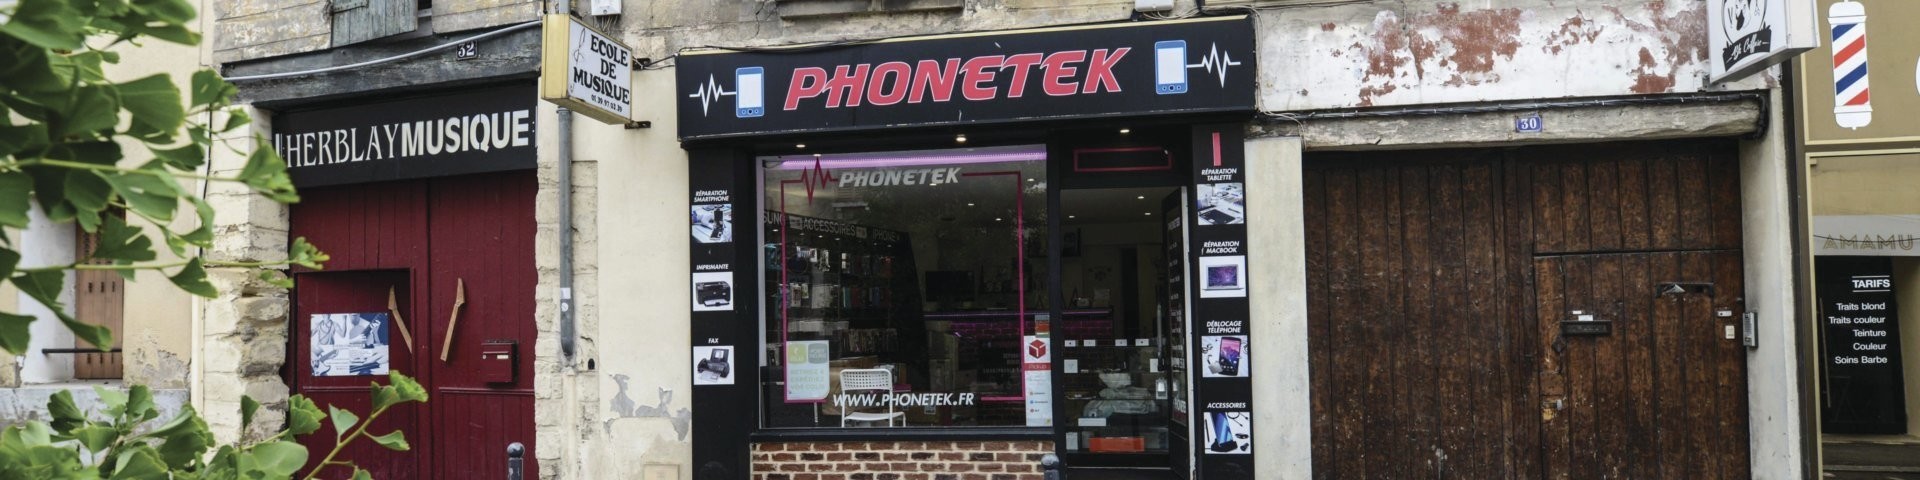 Boutique PHONETEK - Mon commerce  Herblay